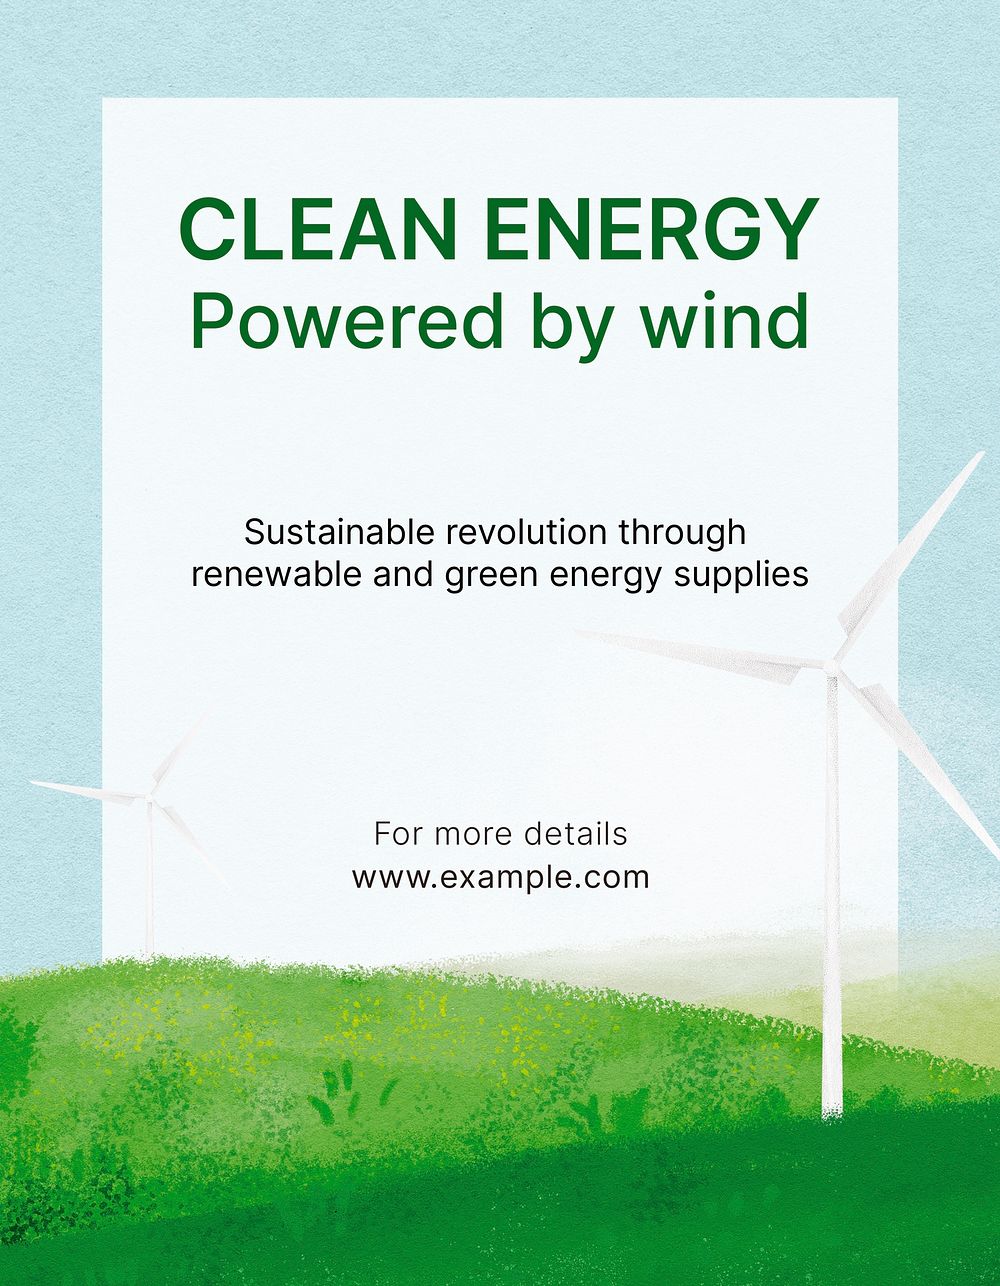 Clean energy flyer template, wind turbine illustration psd